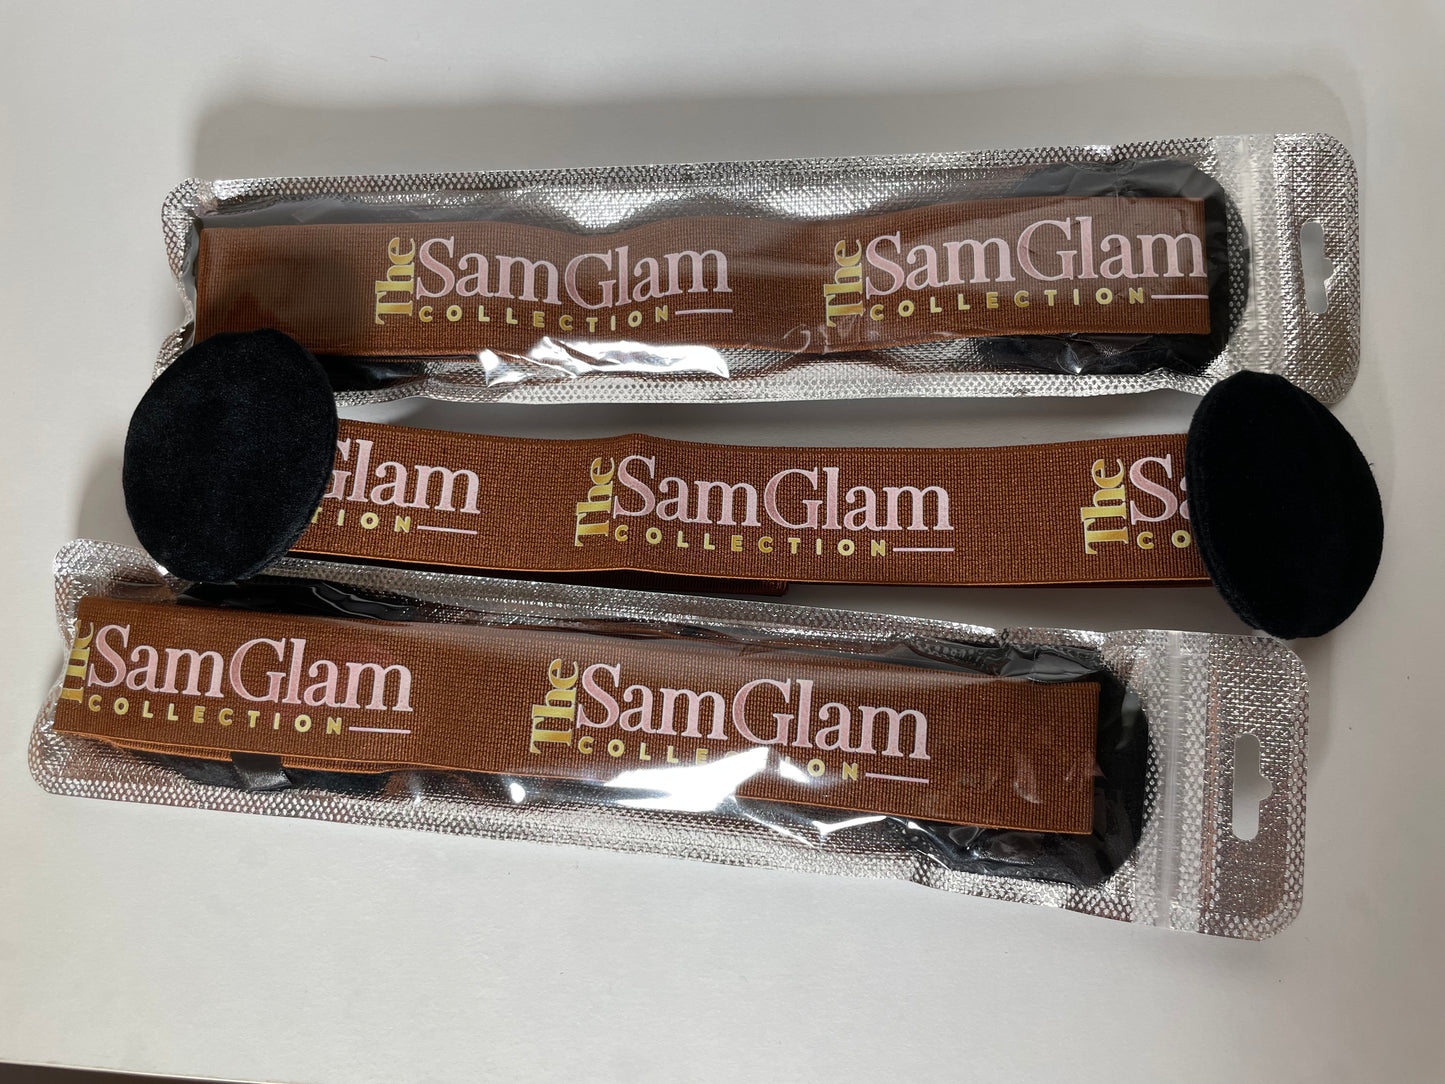 The Sam Glam Ear Protect Lace Melt Band